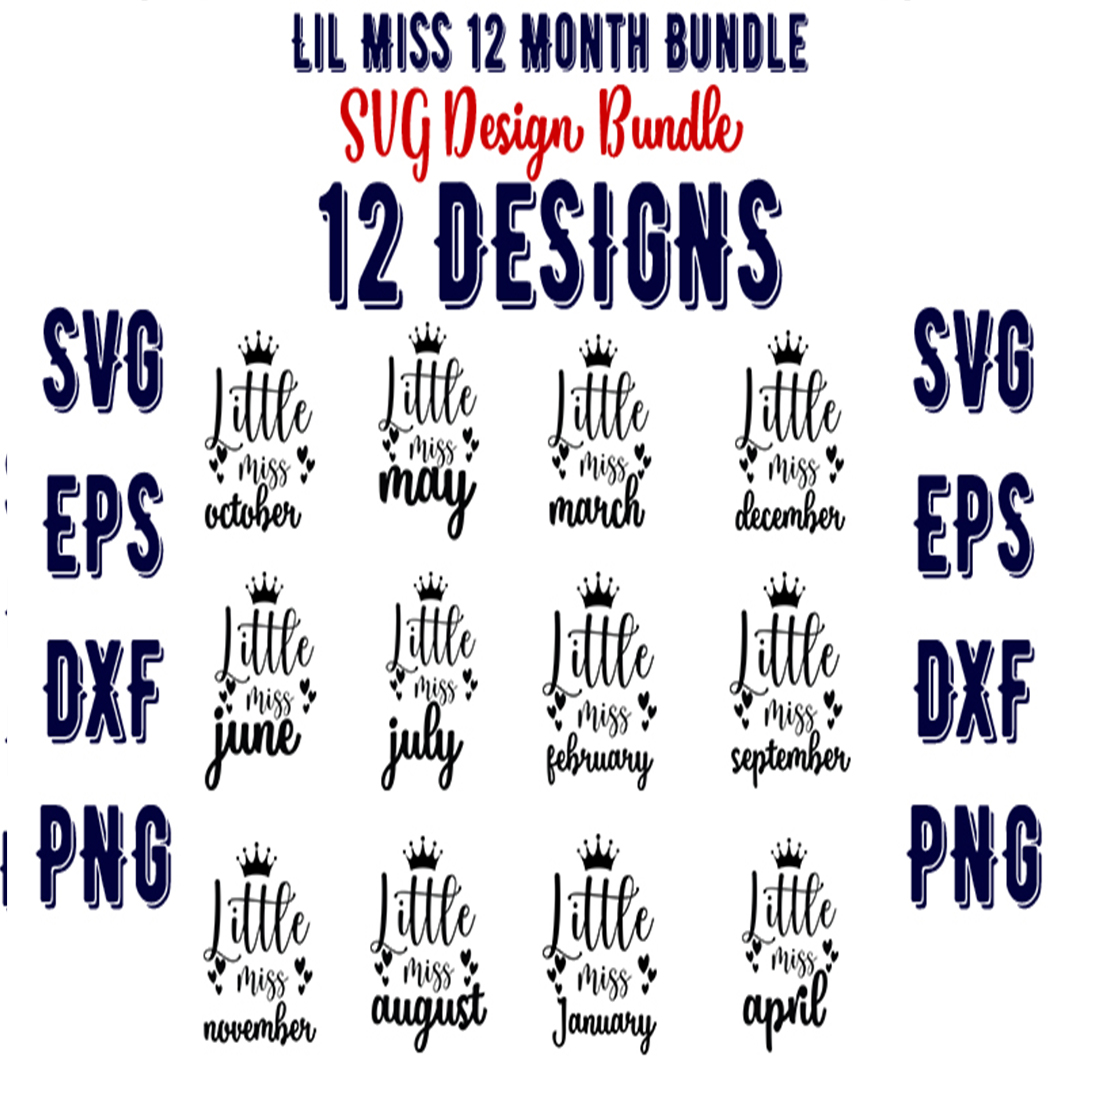 Lil Miss 12 Month Bundle preview image.